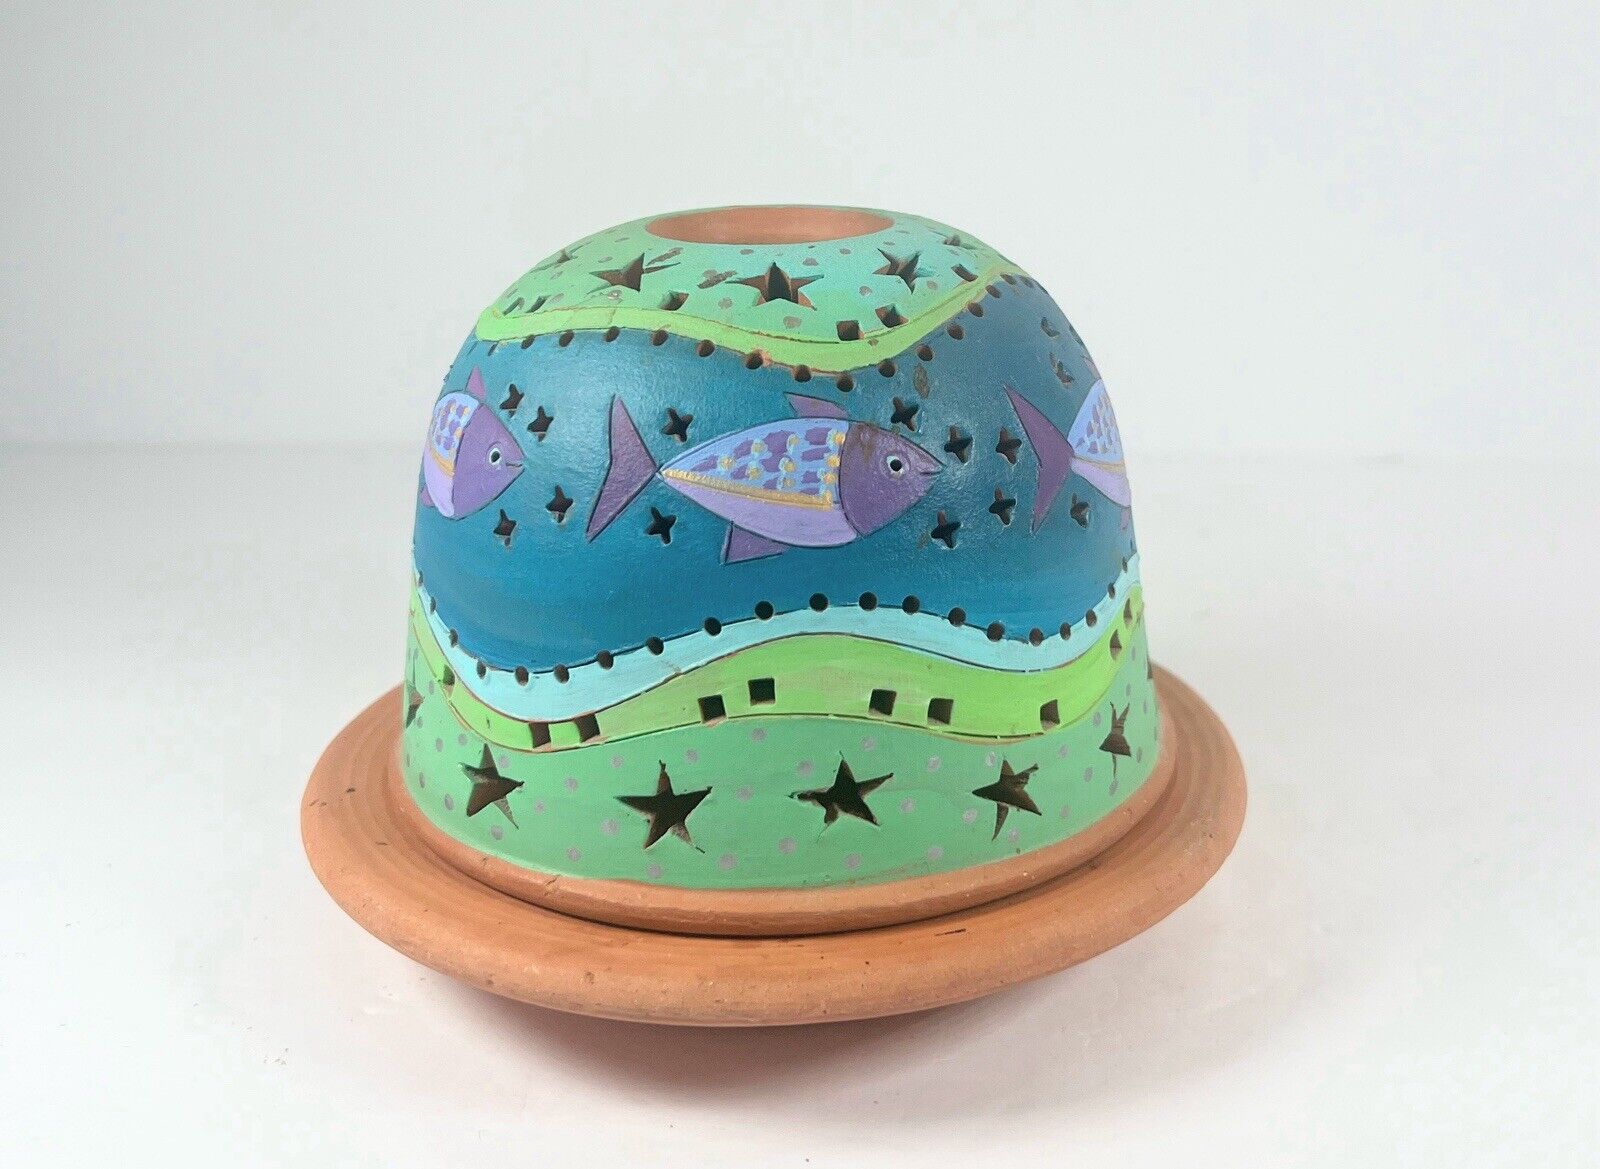 Terra Cotta Fairy Lamp Dome Hand Painted Swimming Fish, Stars & Diamond Holes.